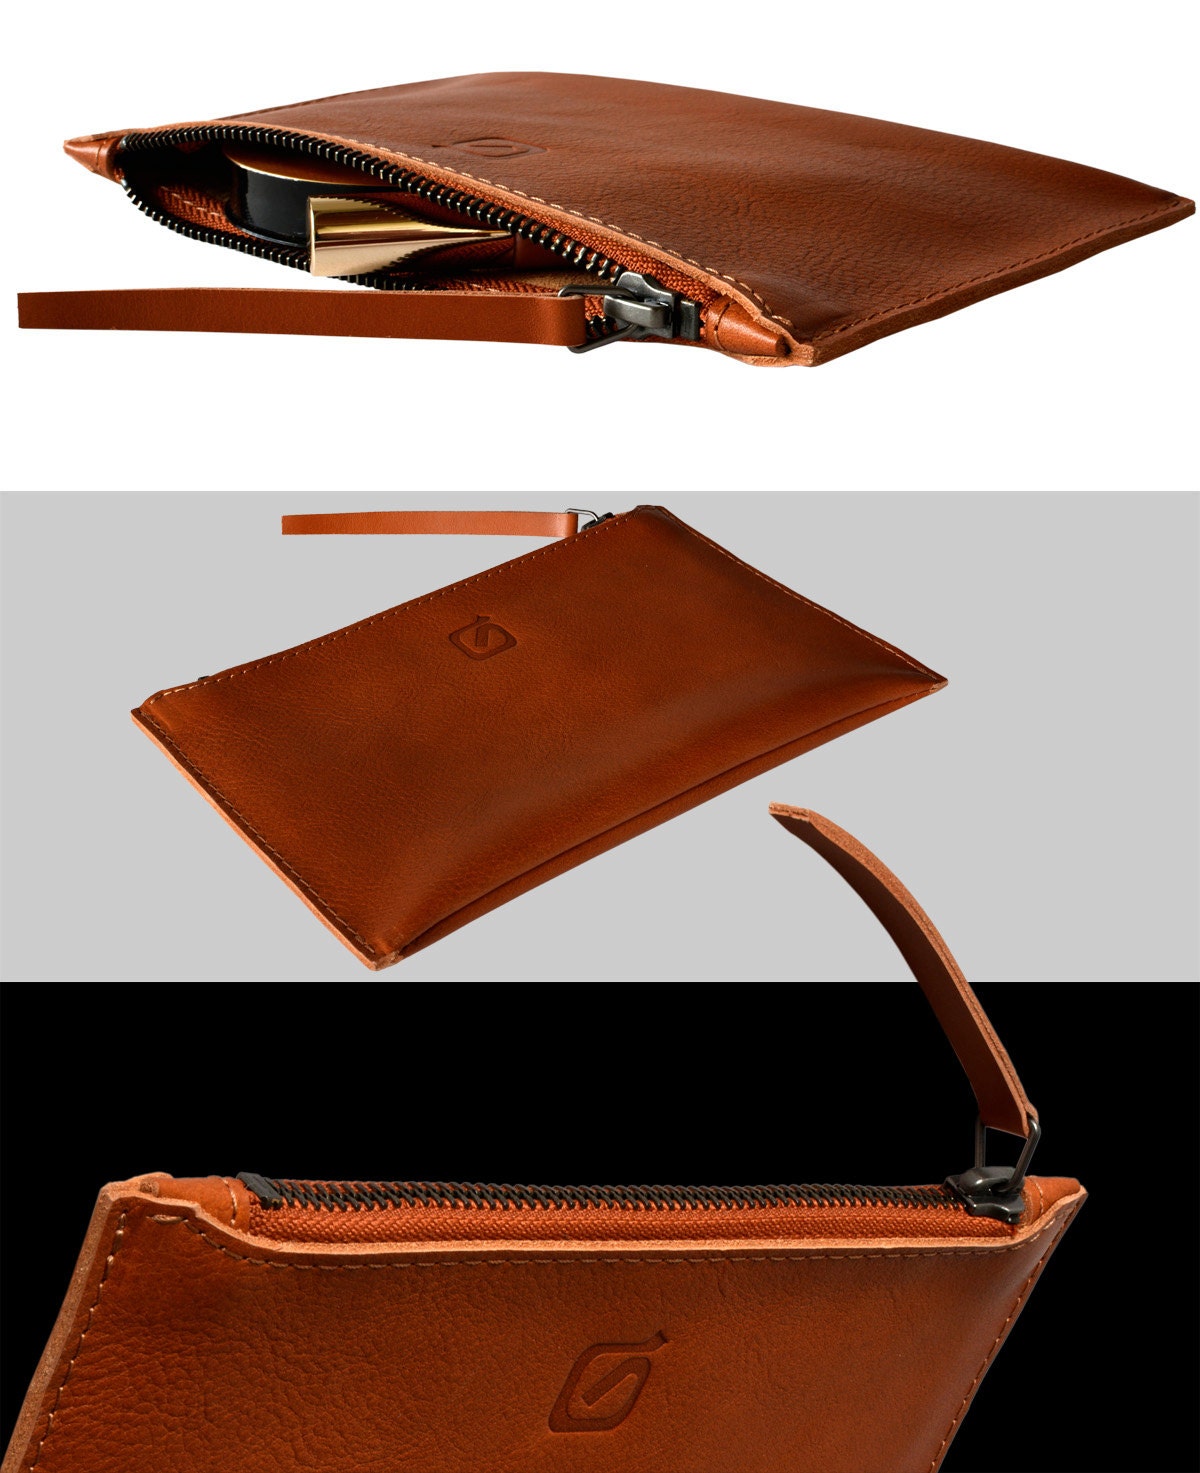 Small leather clutch purse women's wallet cognac tan | Etsy